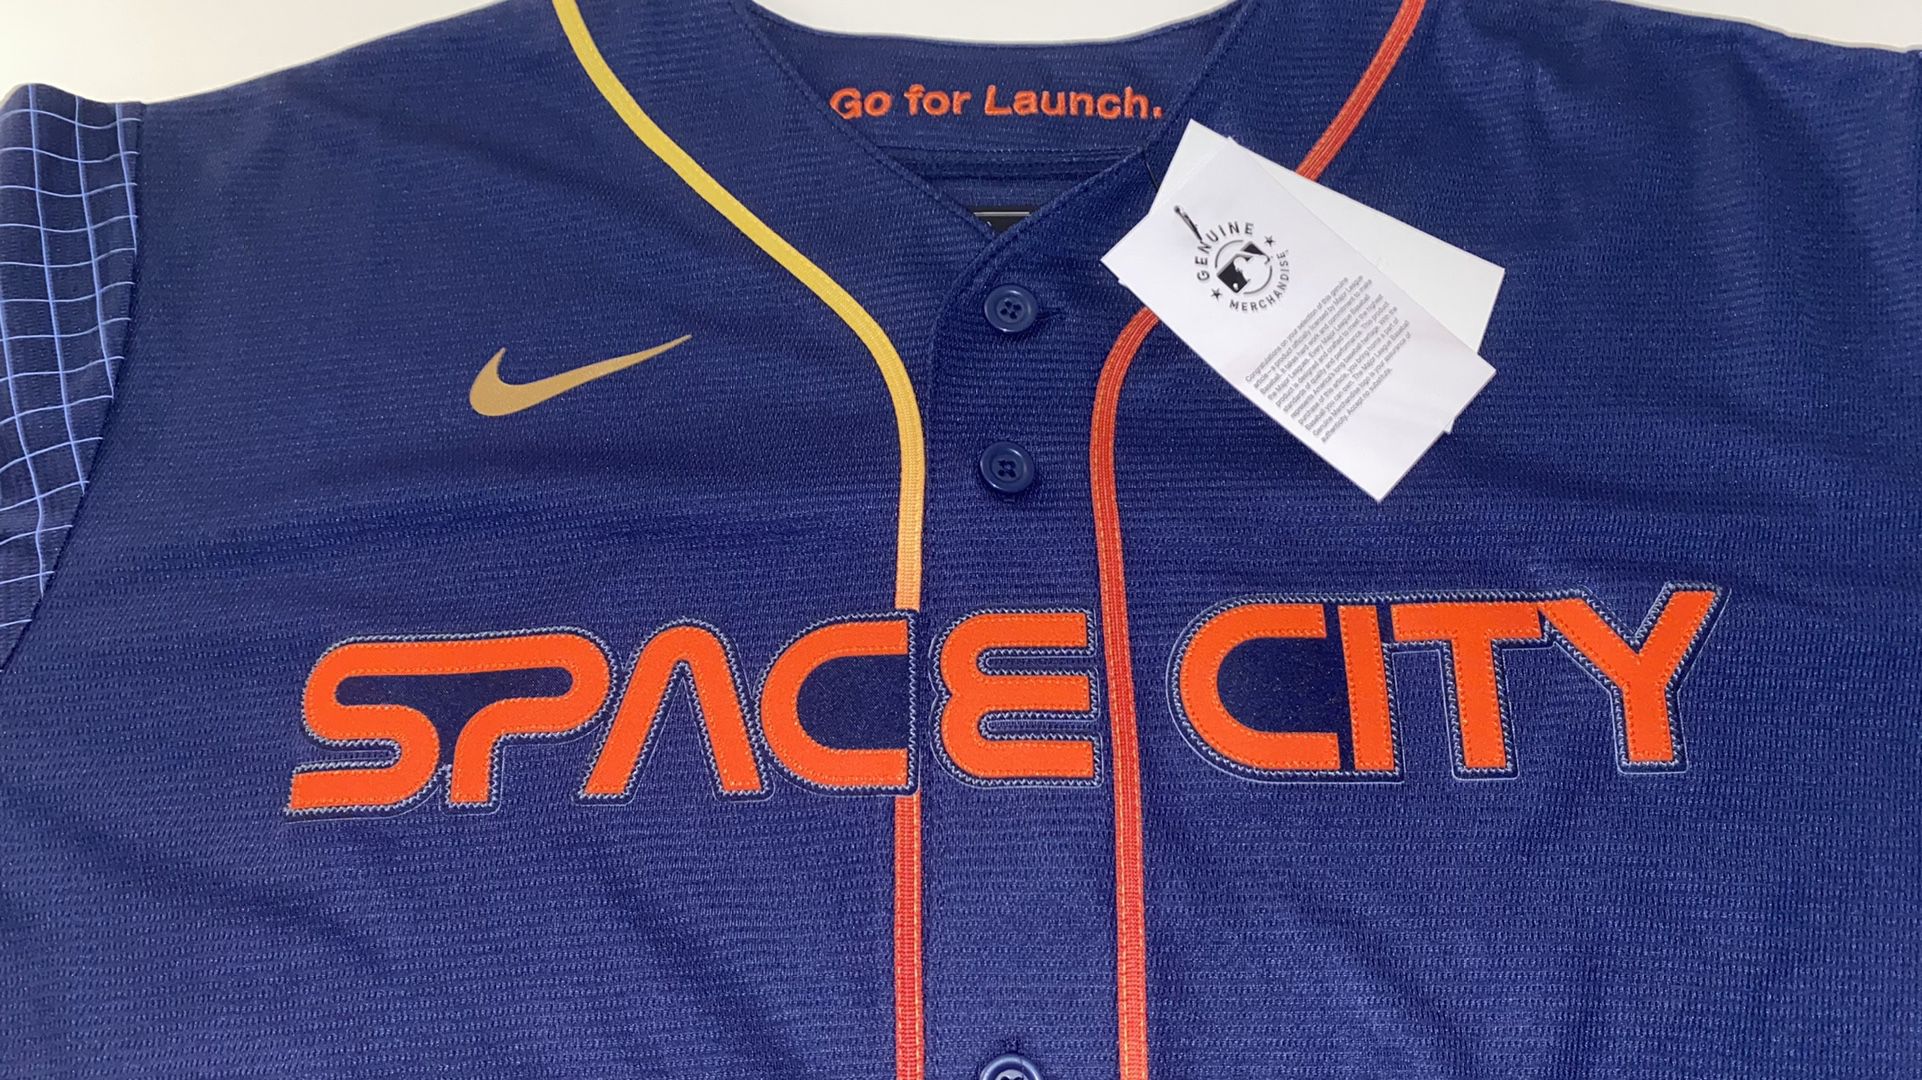 houston astros space city jersey